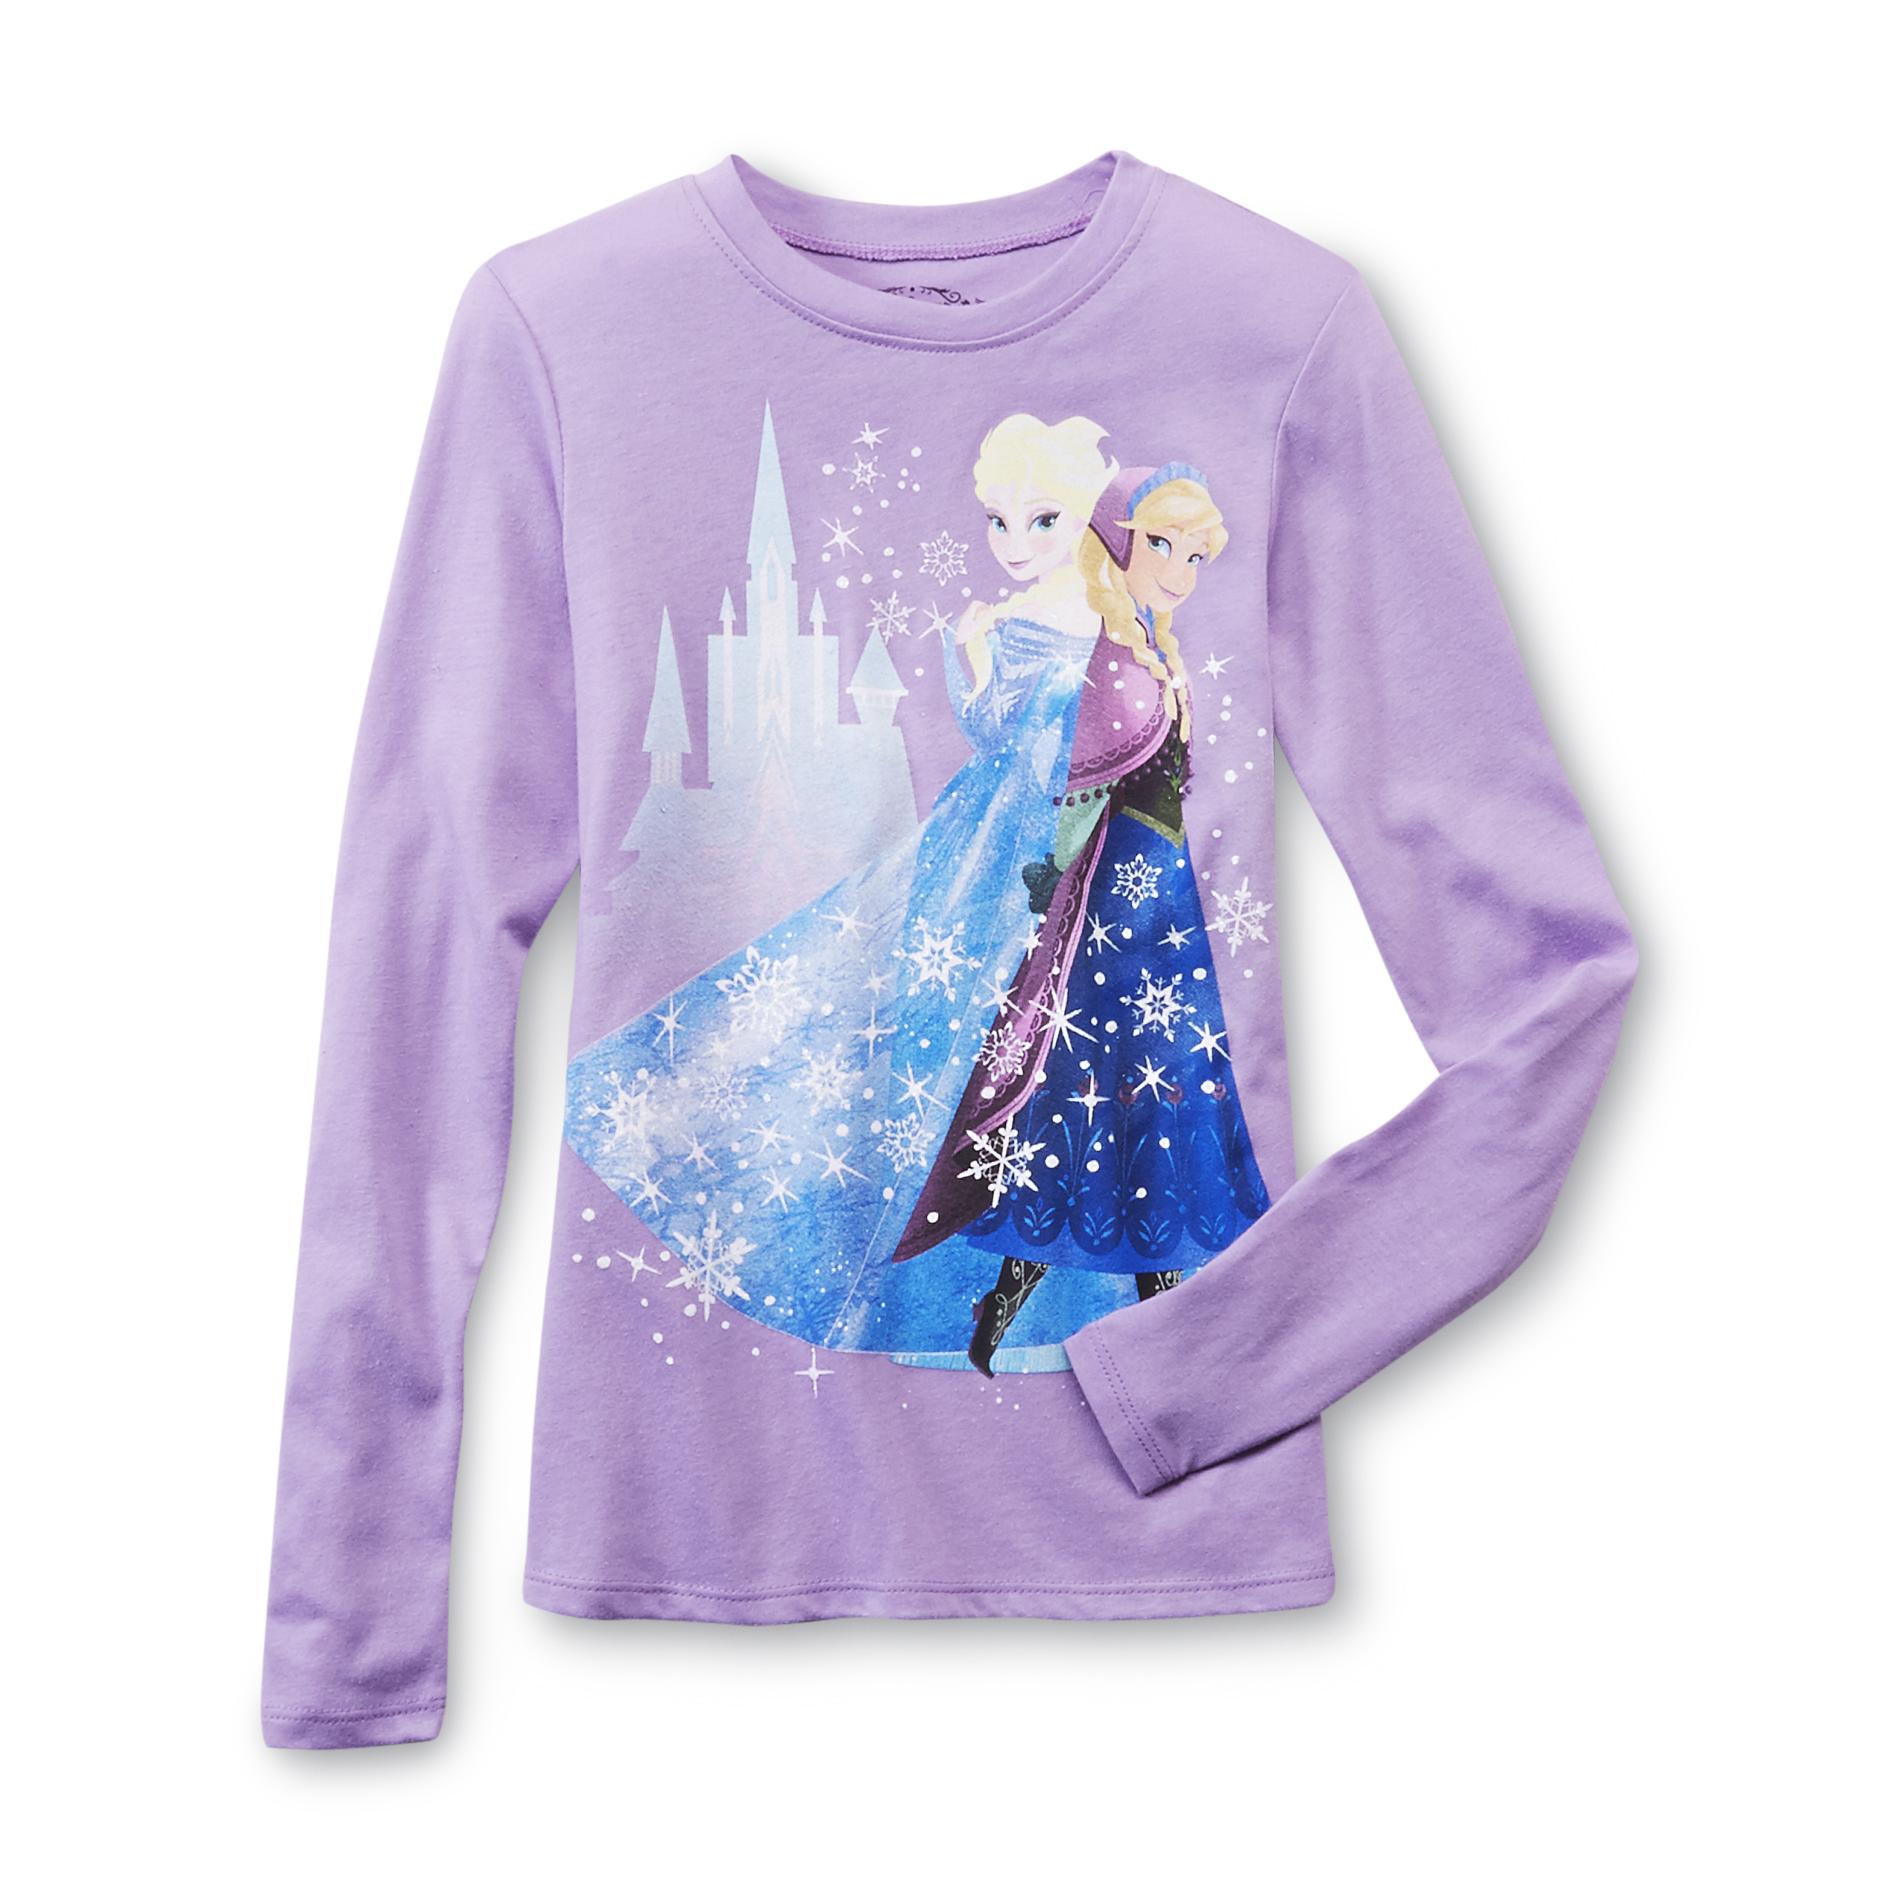 Disney Frozen Girl's Graphic Top - Anna & Elsa